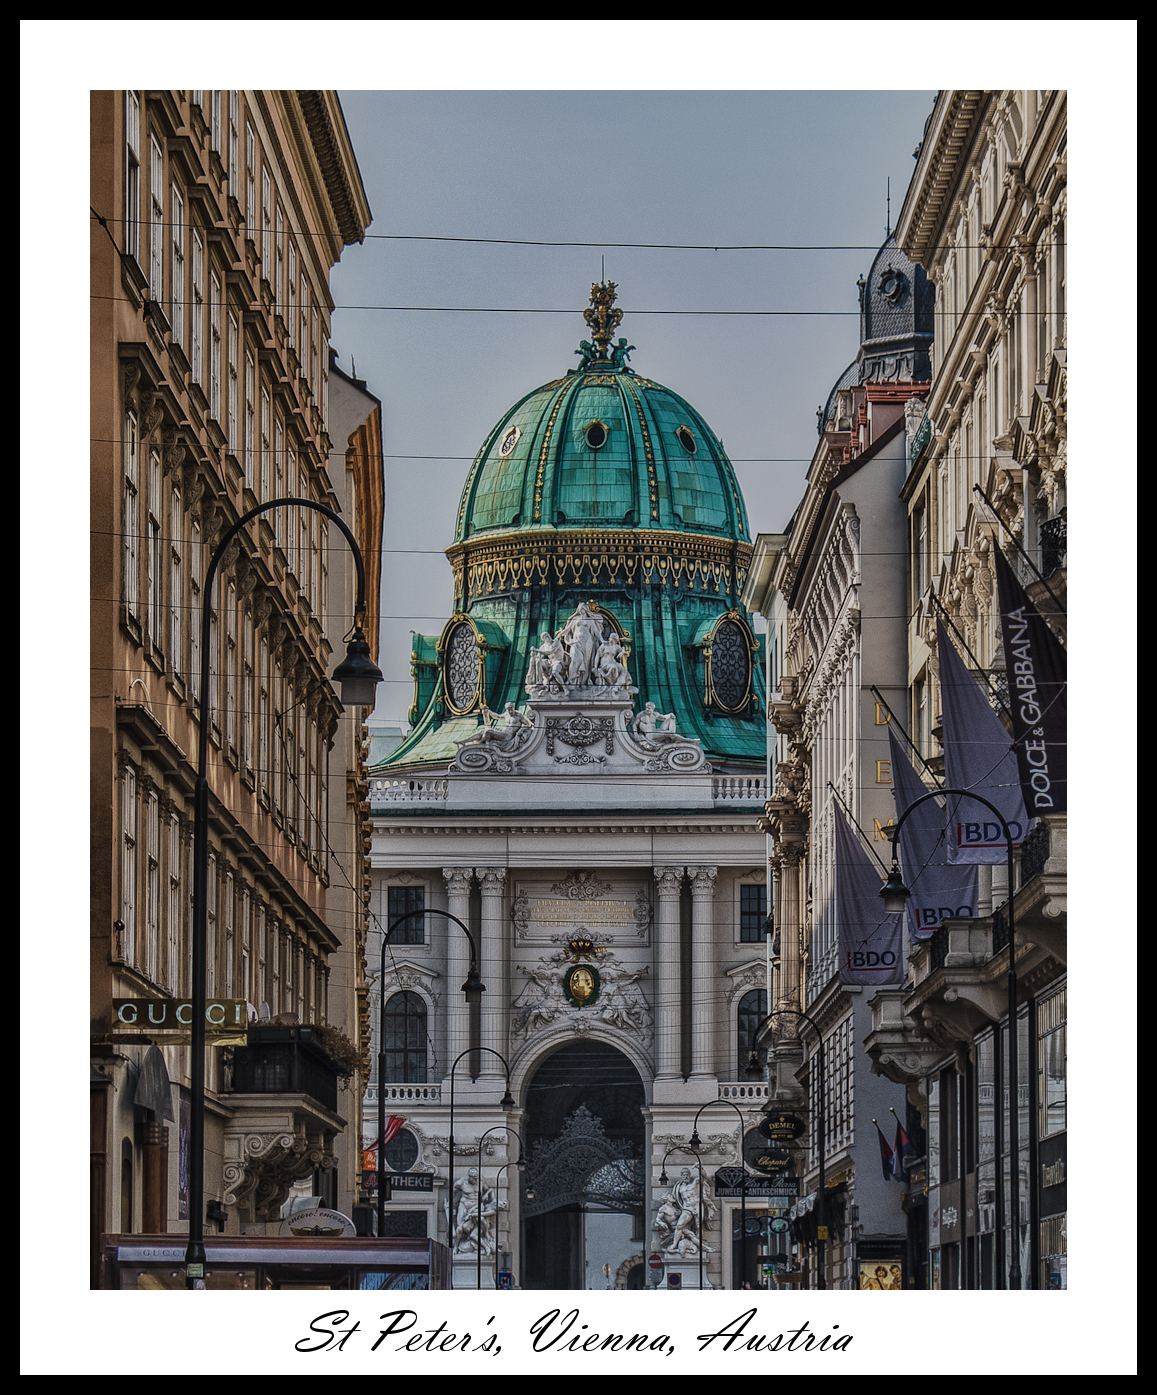 St. Peter's, Vienna, Austria, fuji x10